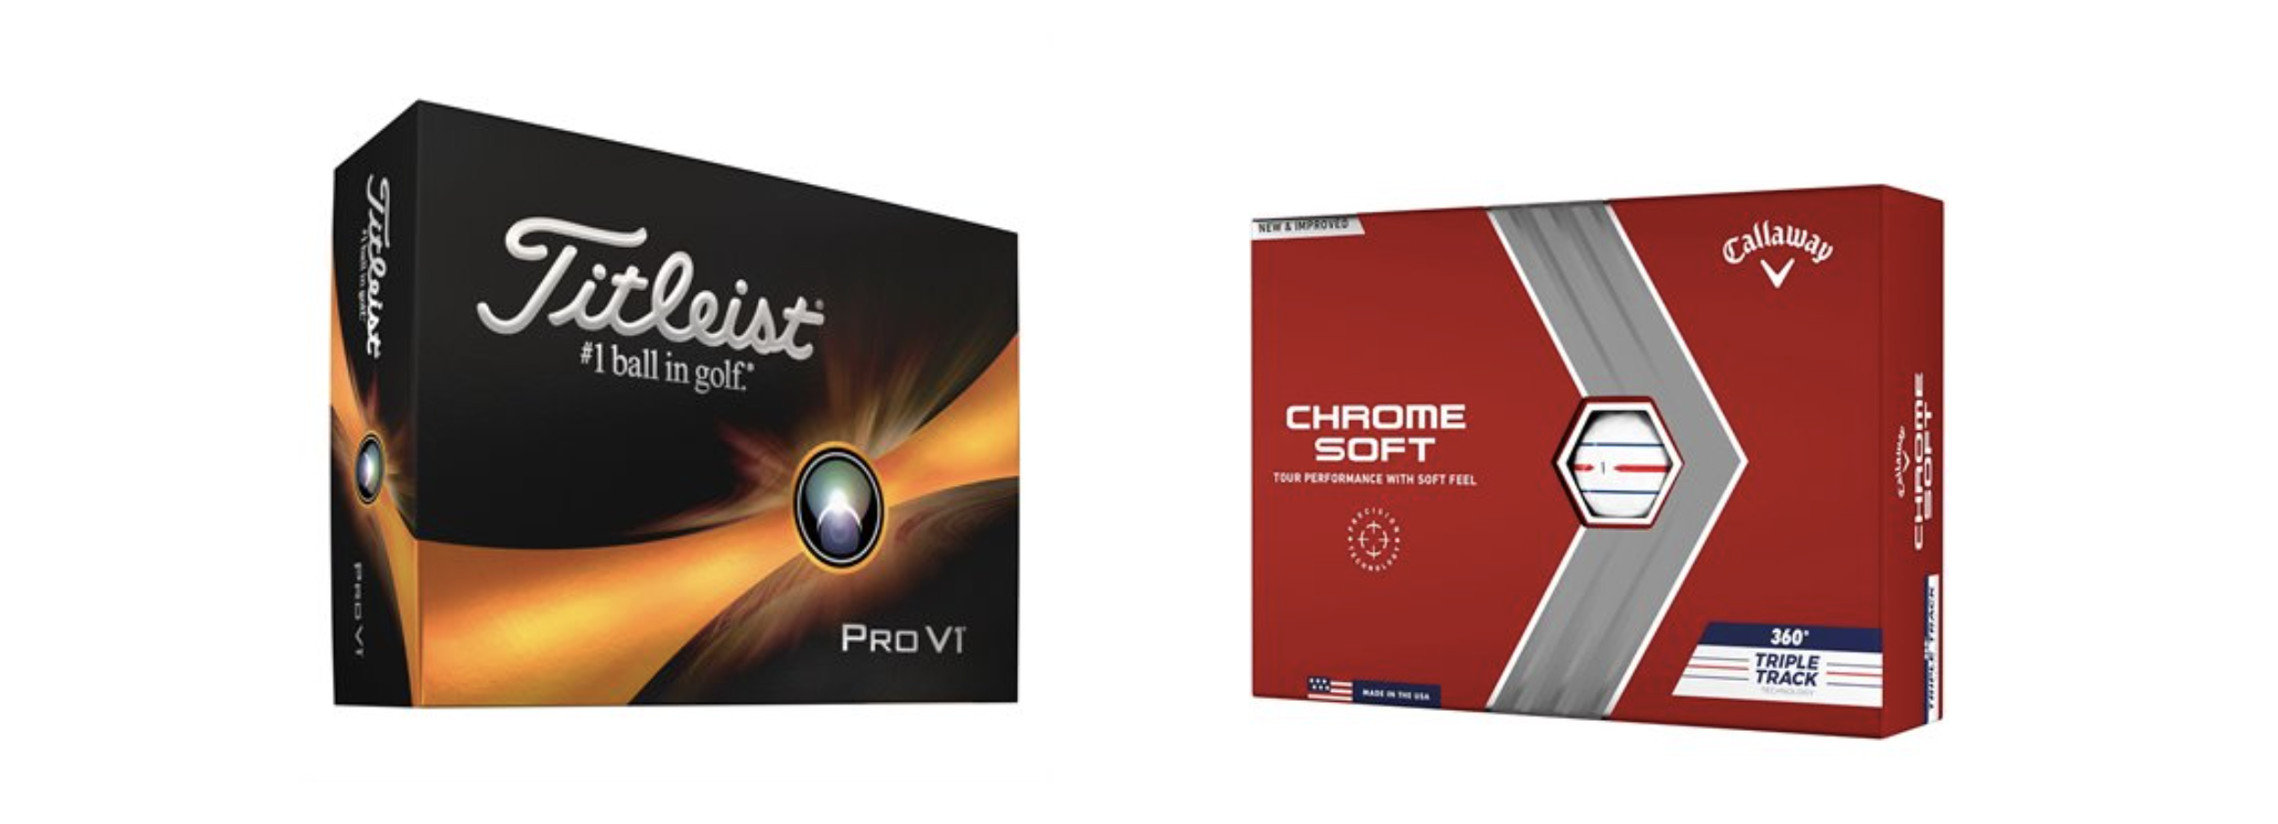 Callaway Chrome Soft vs Titliest Pro V1 header